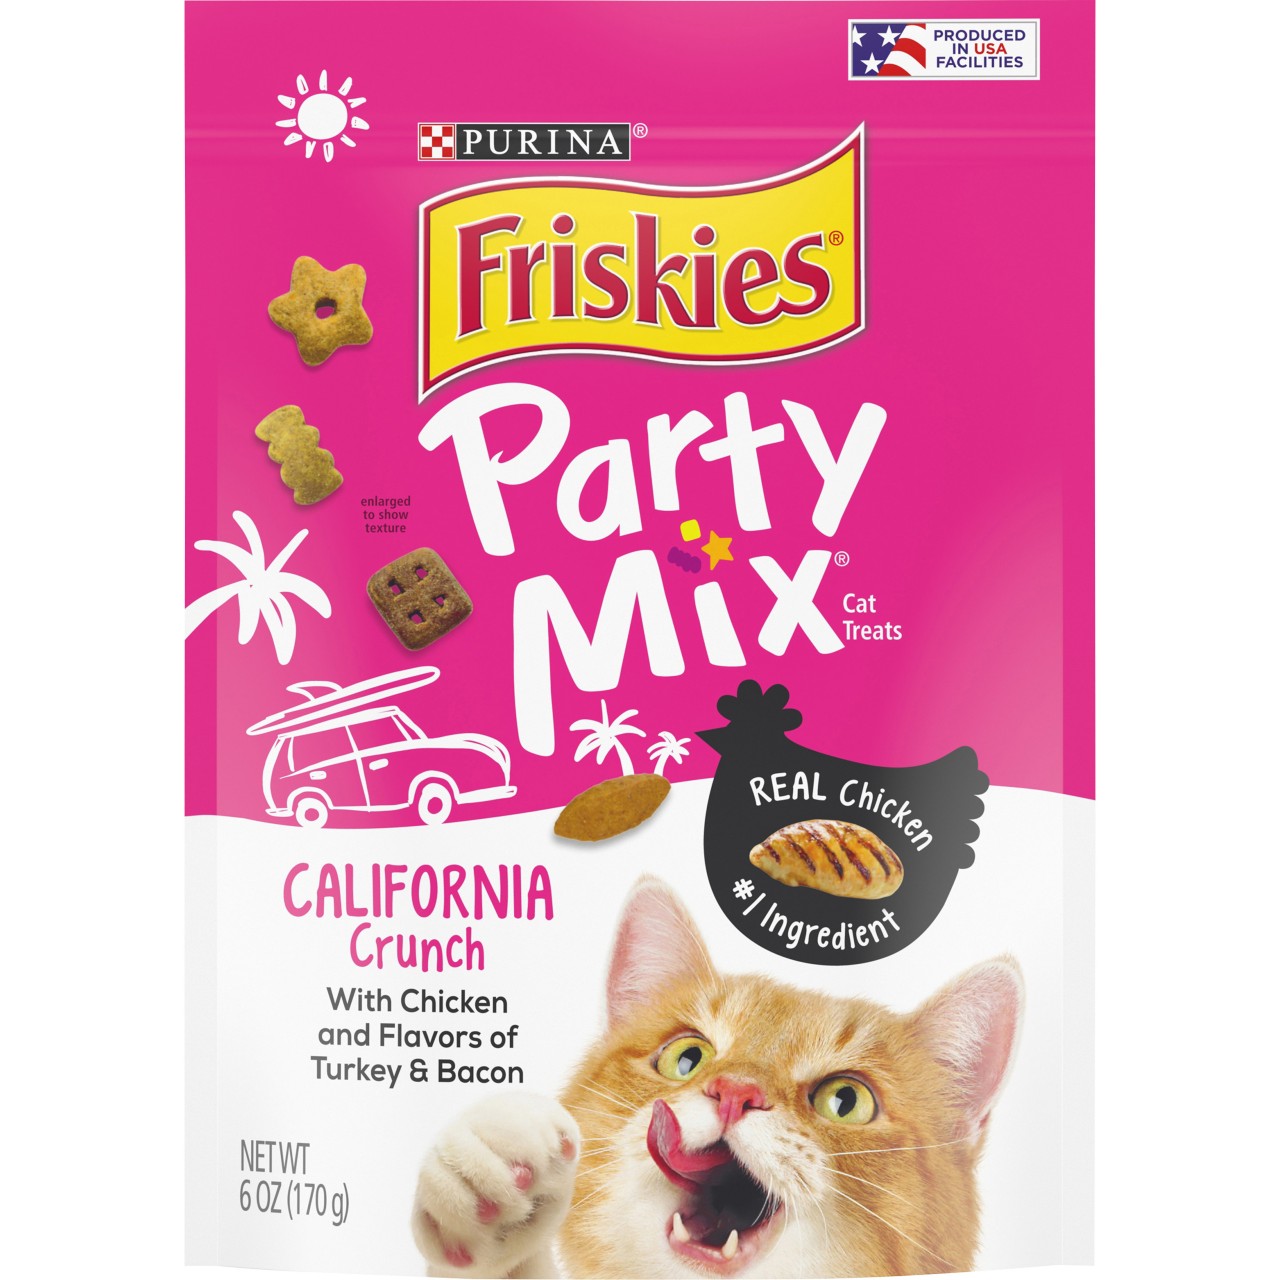 Image links to all crunchy treats catalog.